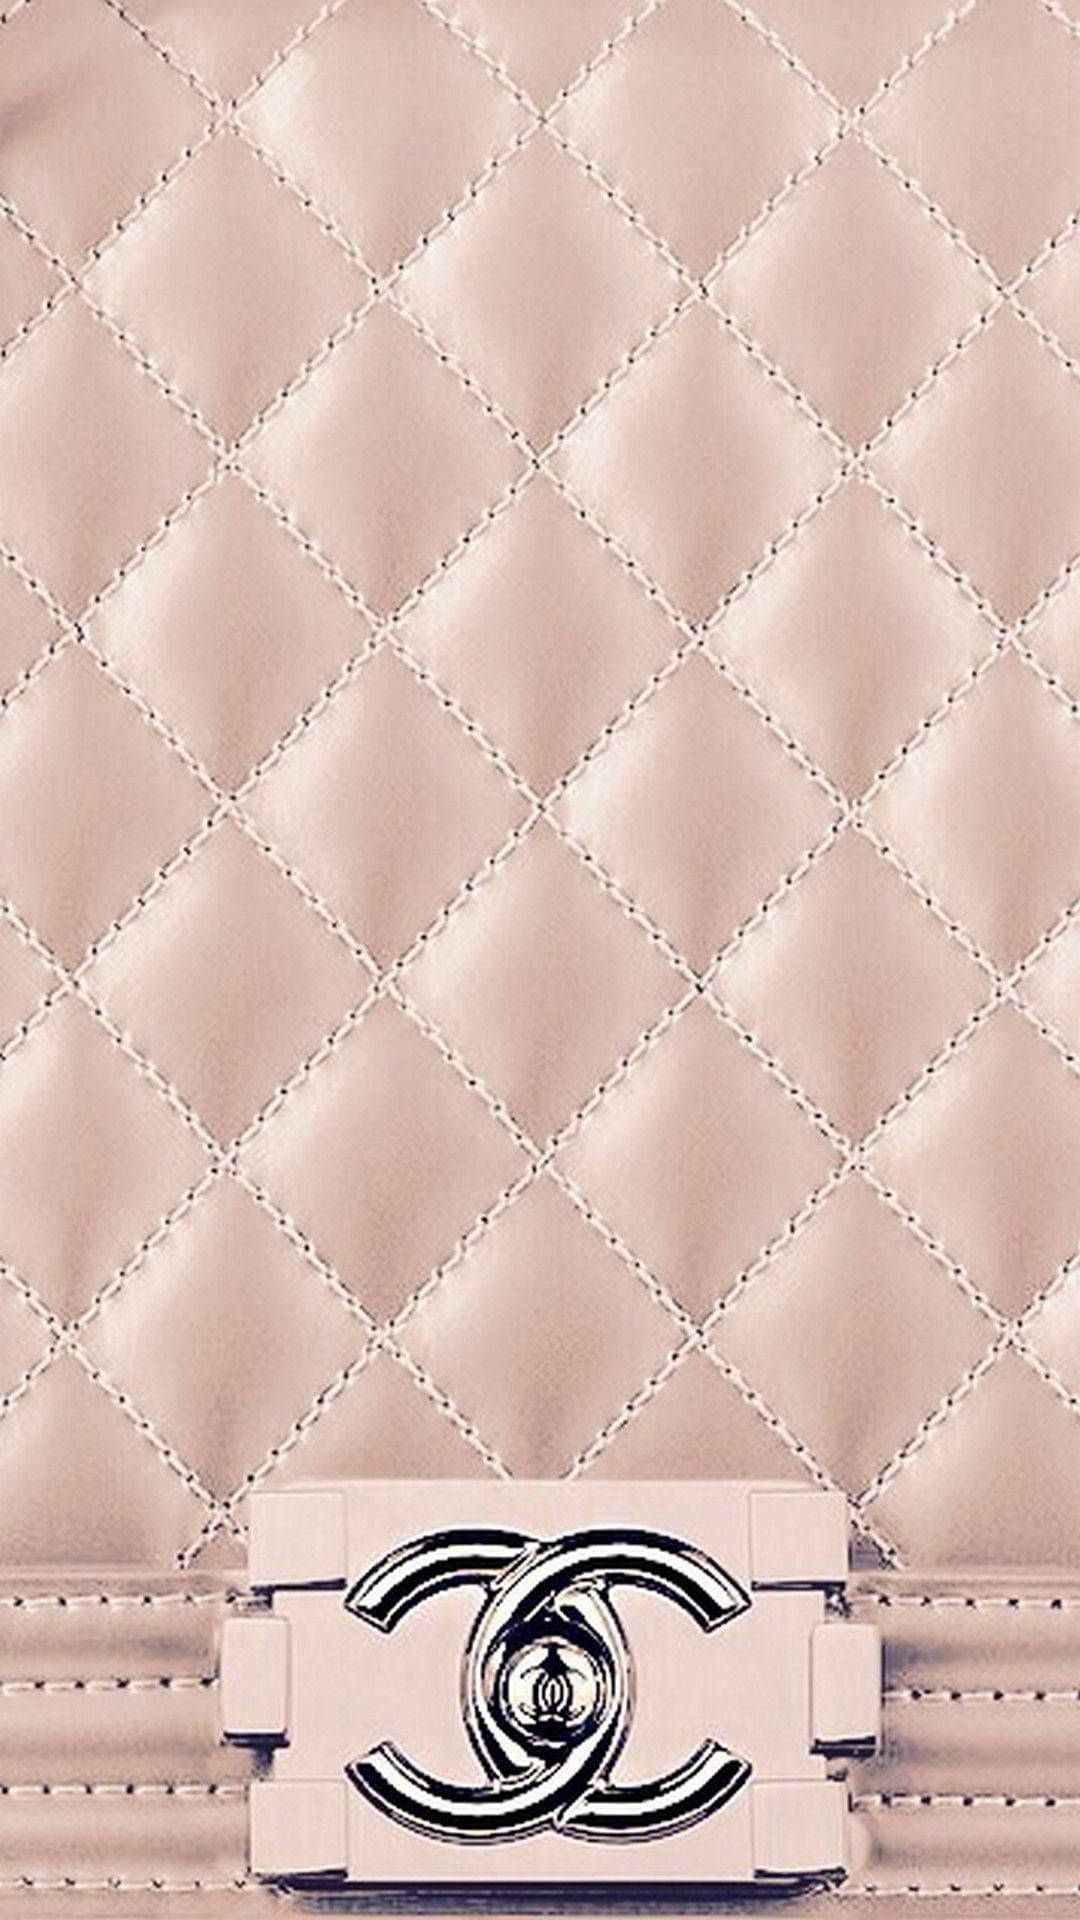 Rose Gold Tumblr Chanel Bag Wallpaper